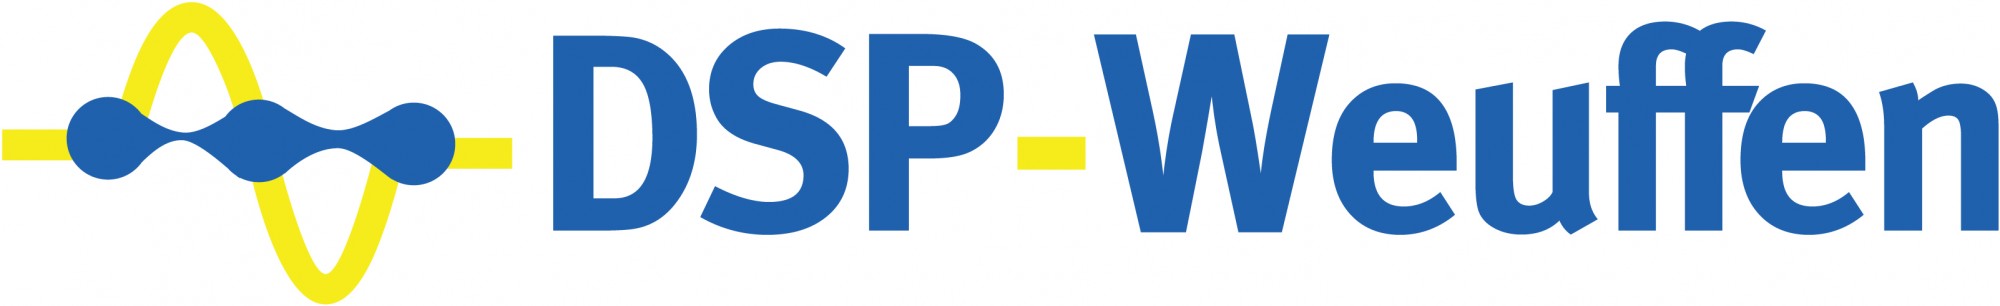 Dsp-weuffen hks logo